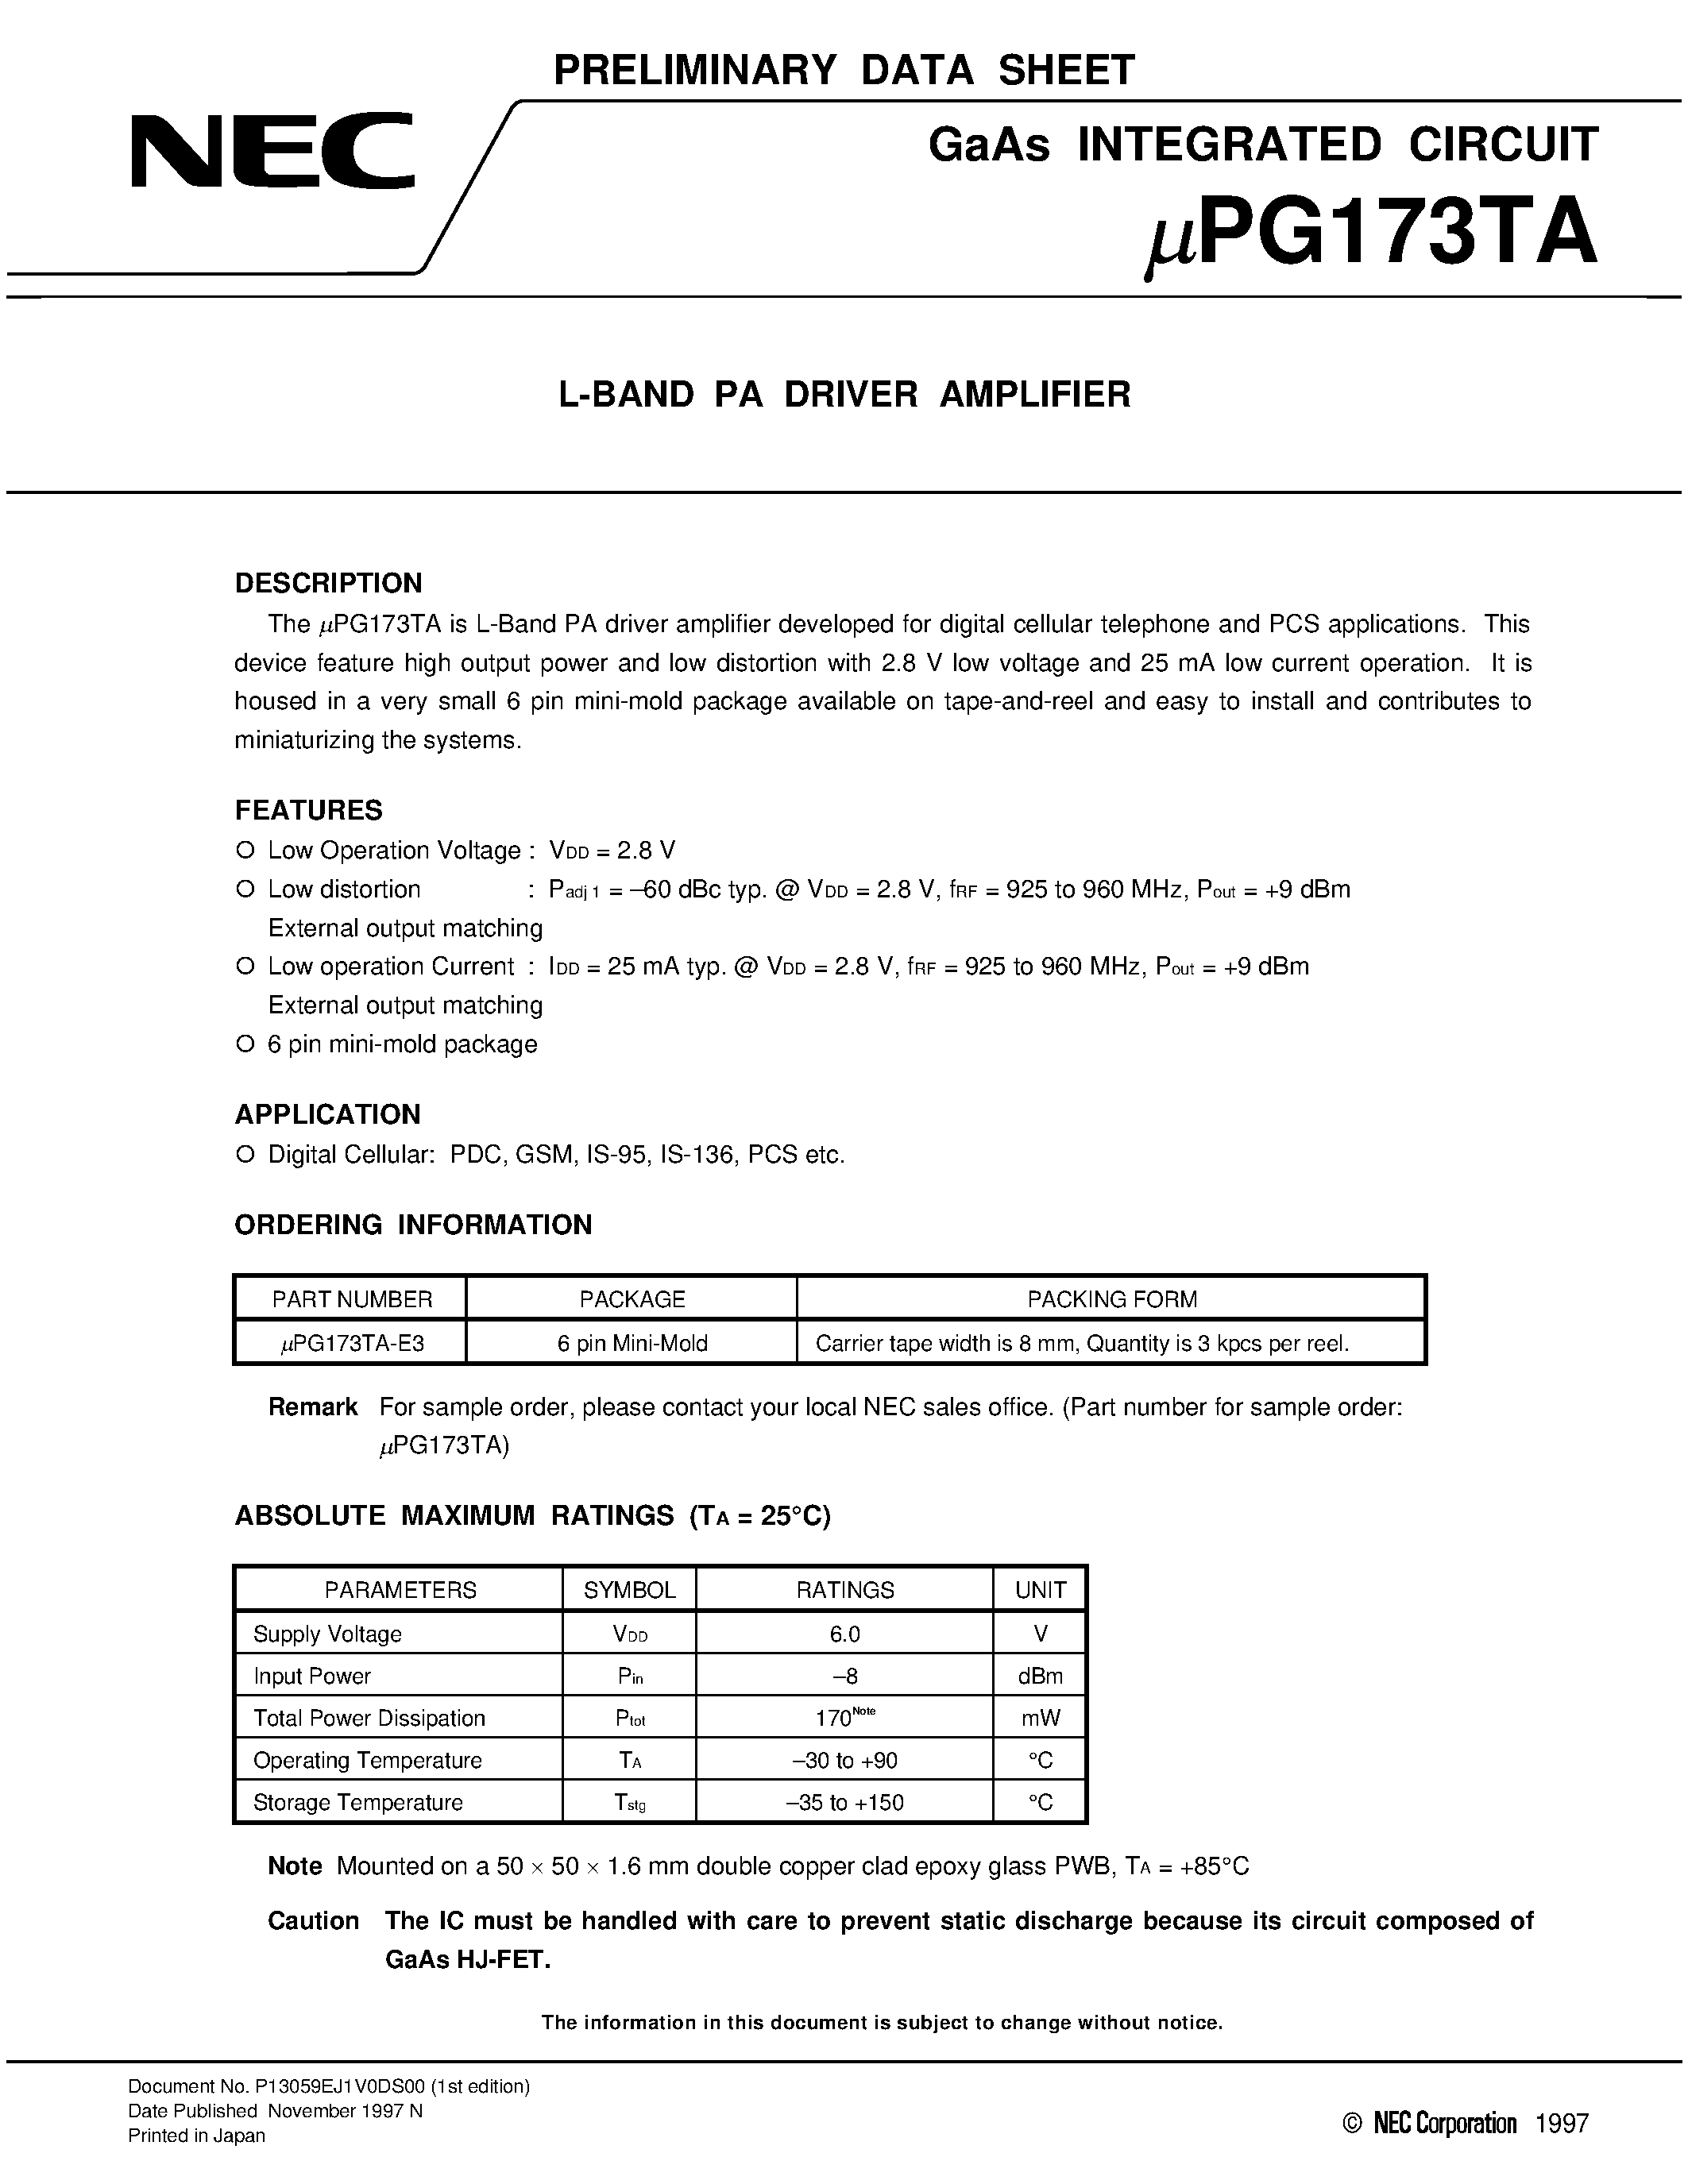 Datasheet UPG173TA - L-BAND PA DRIVER AMPLIFIER page 1